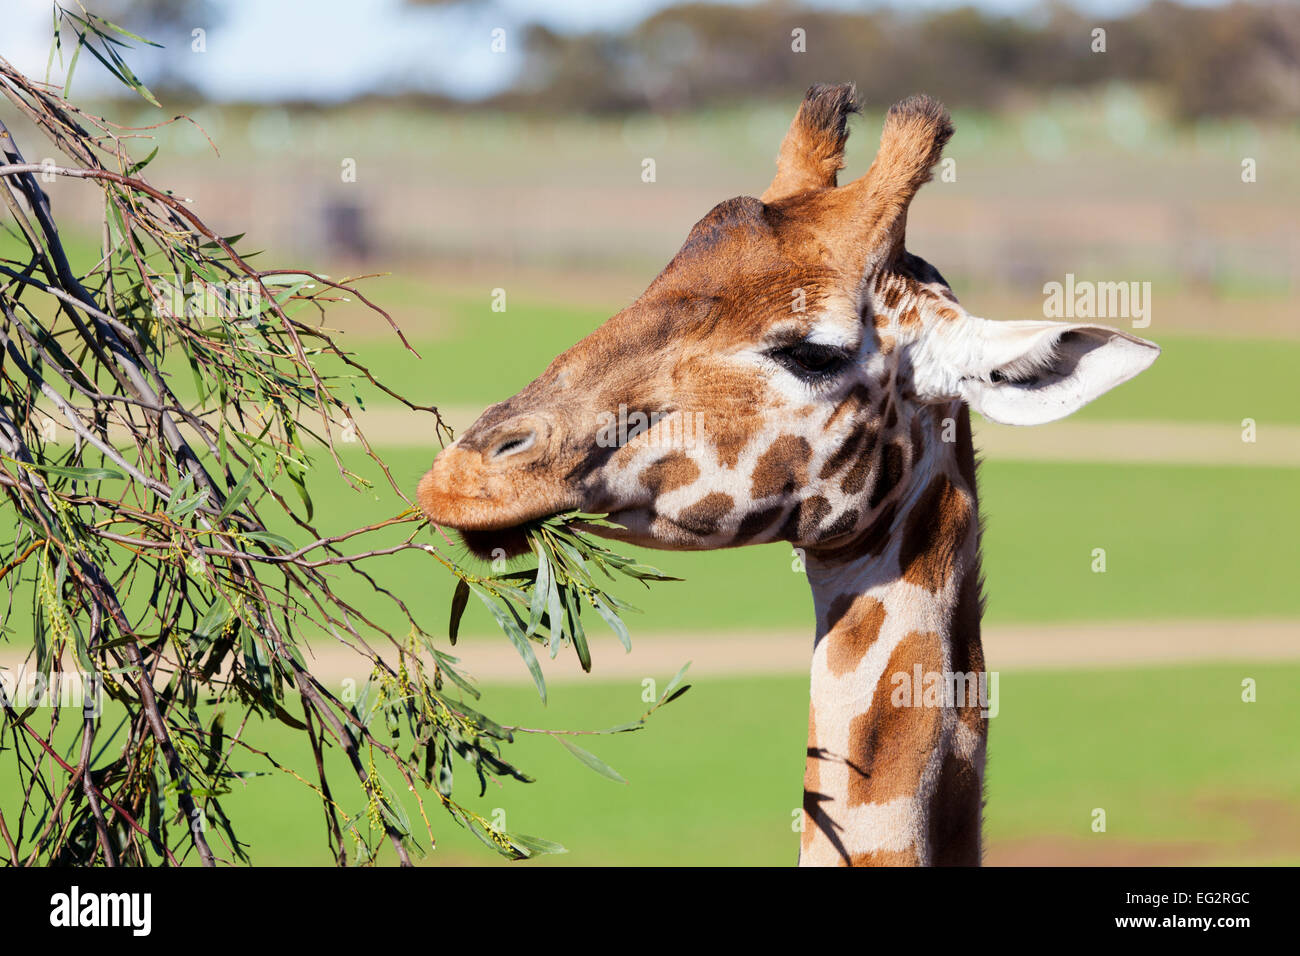 Girafe atteindre les feuilles à manger Banque D'Images